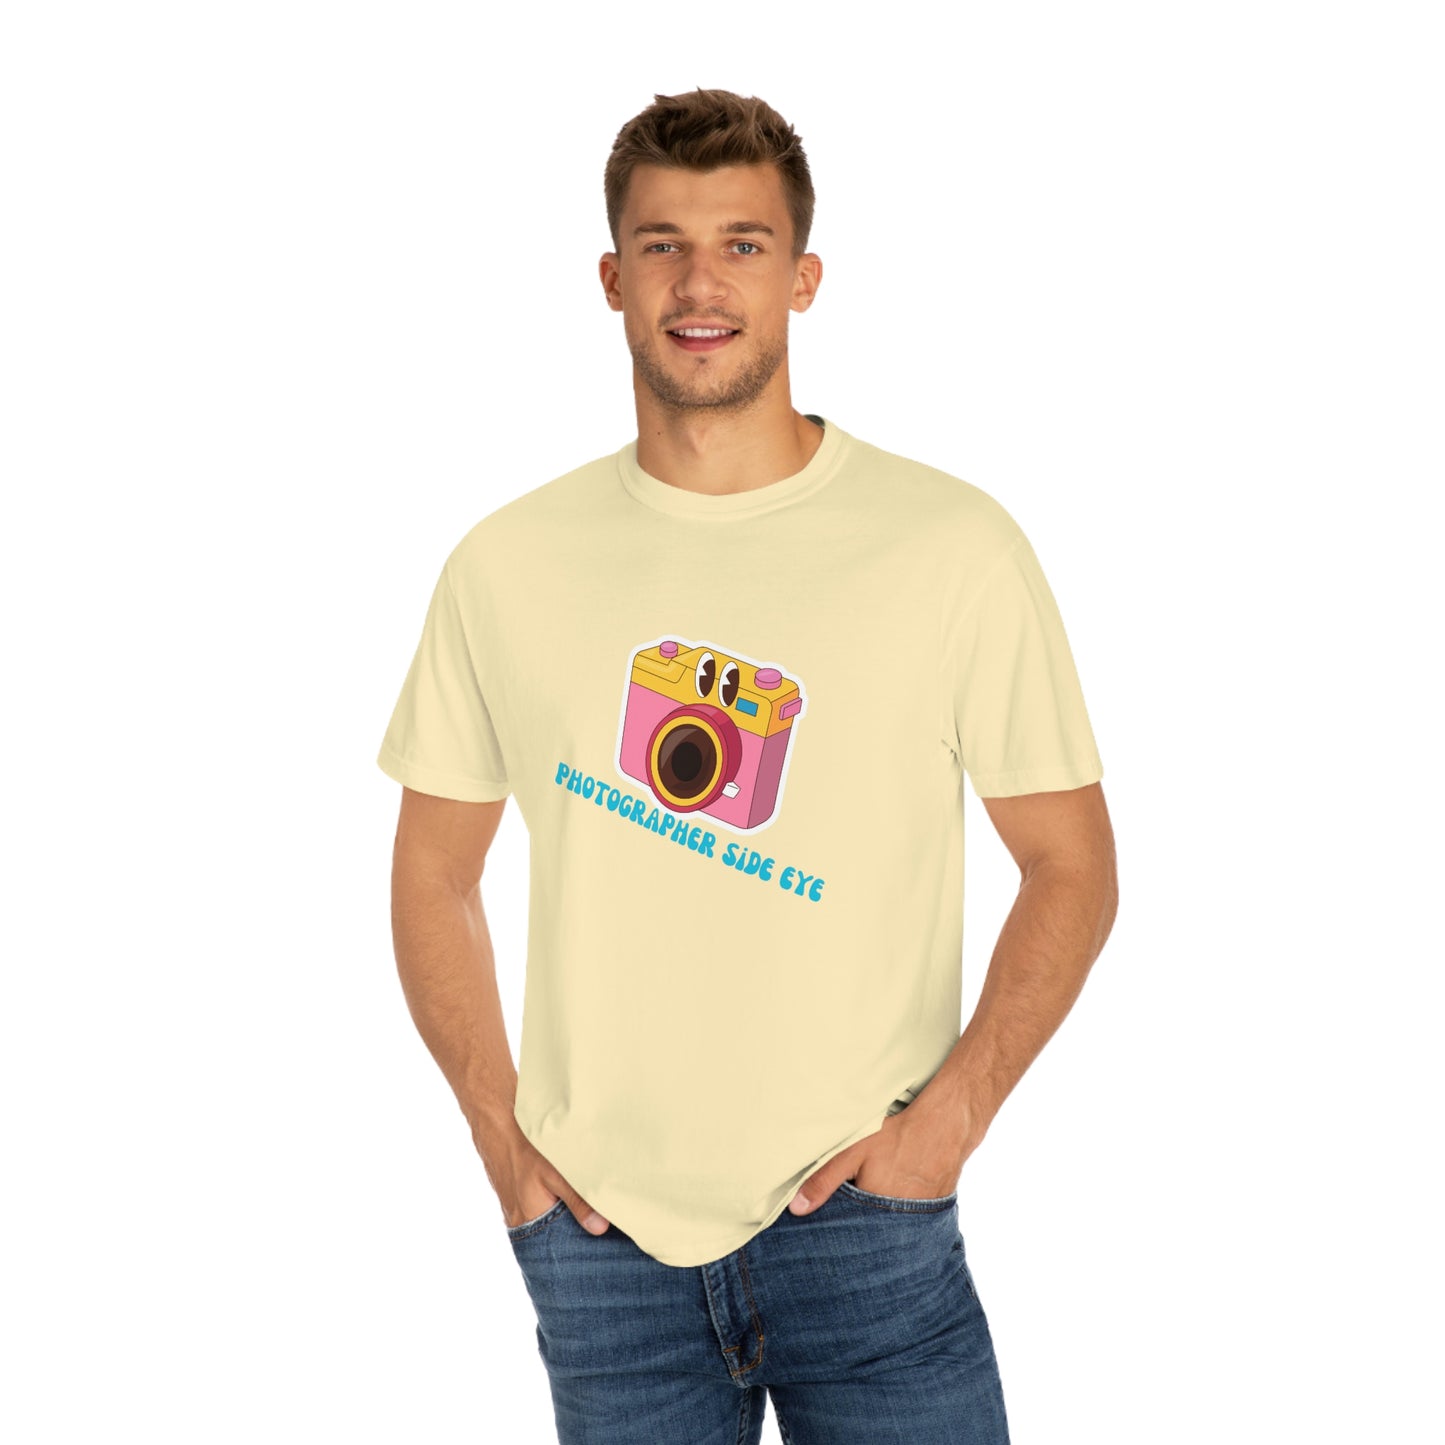 Photographer Side Eye Unisex Garment-Dyed T-shirt